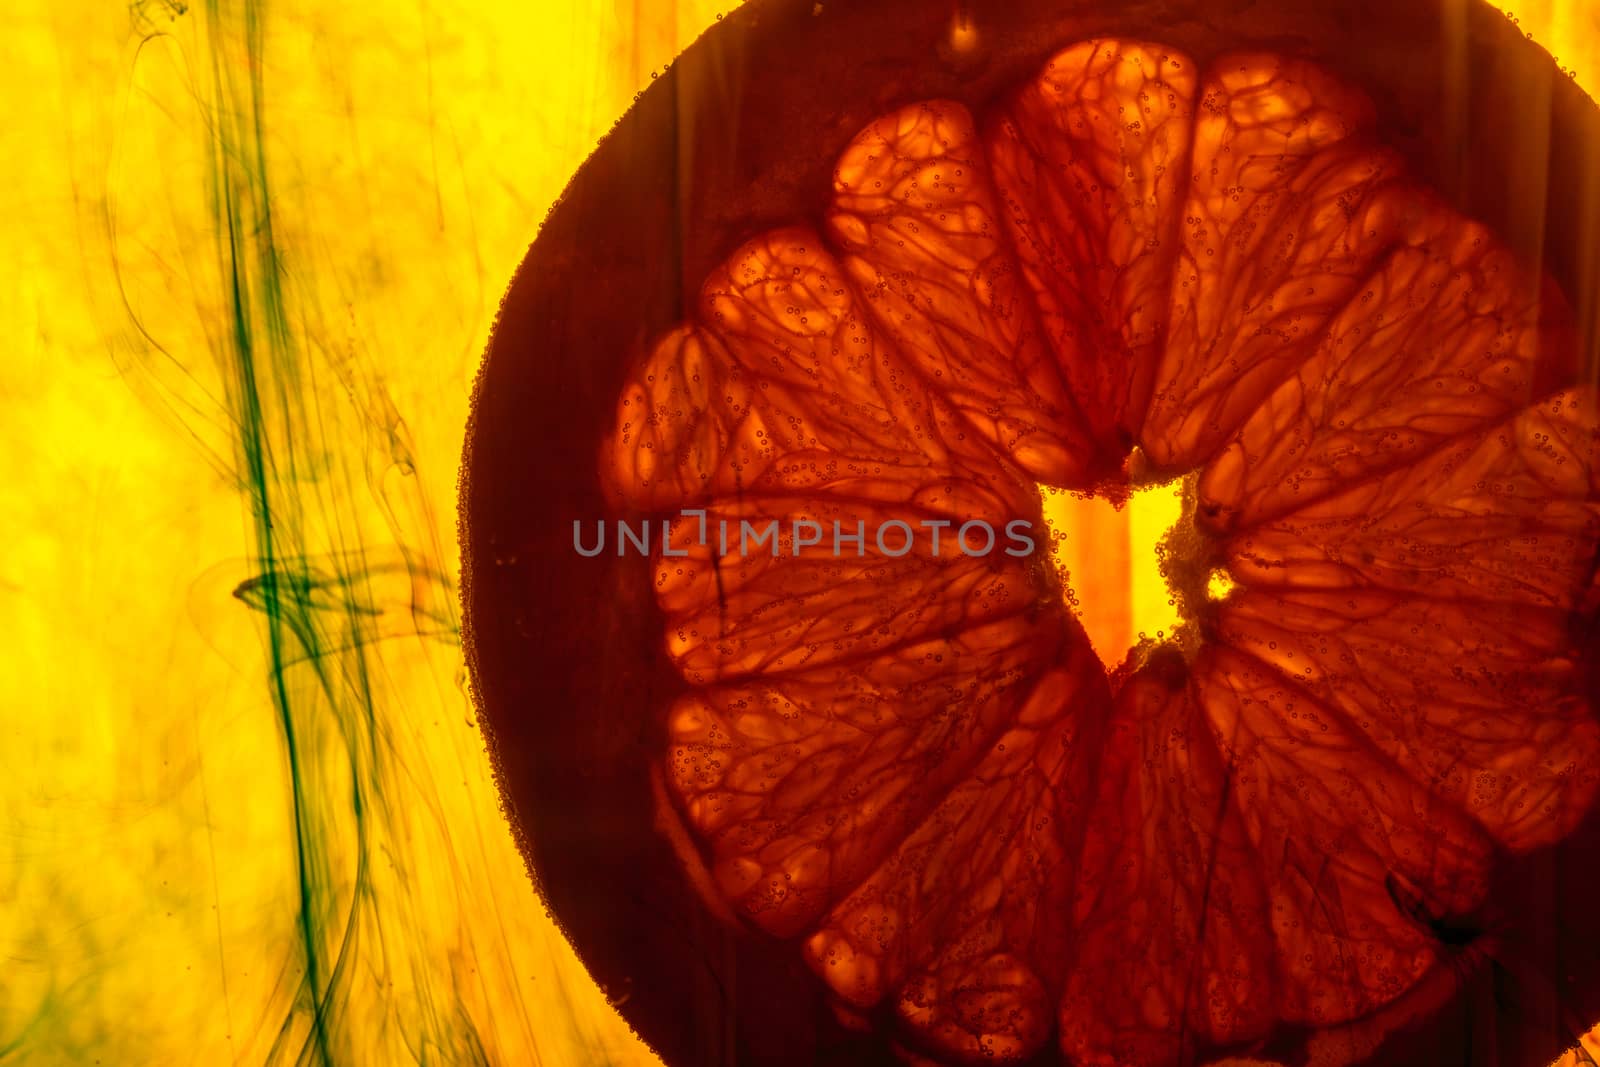  grapefruit slice in water by wjarek